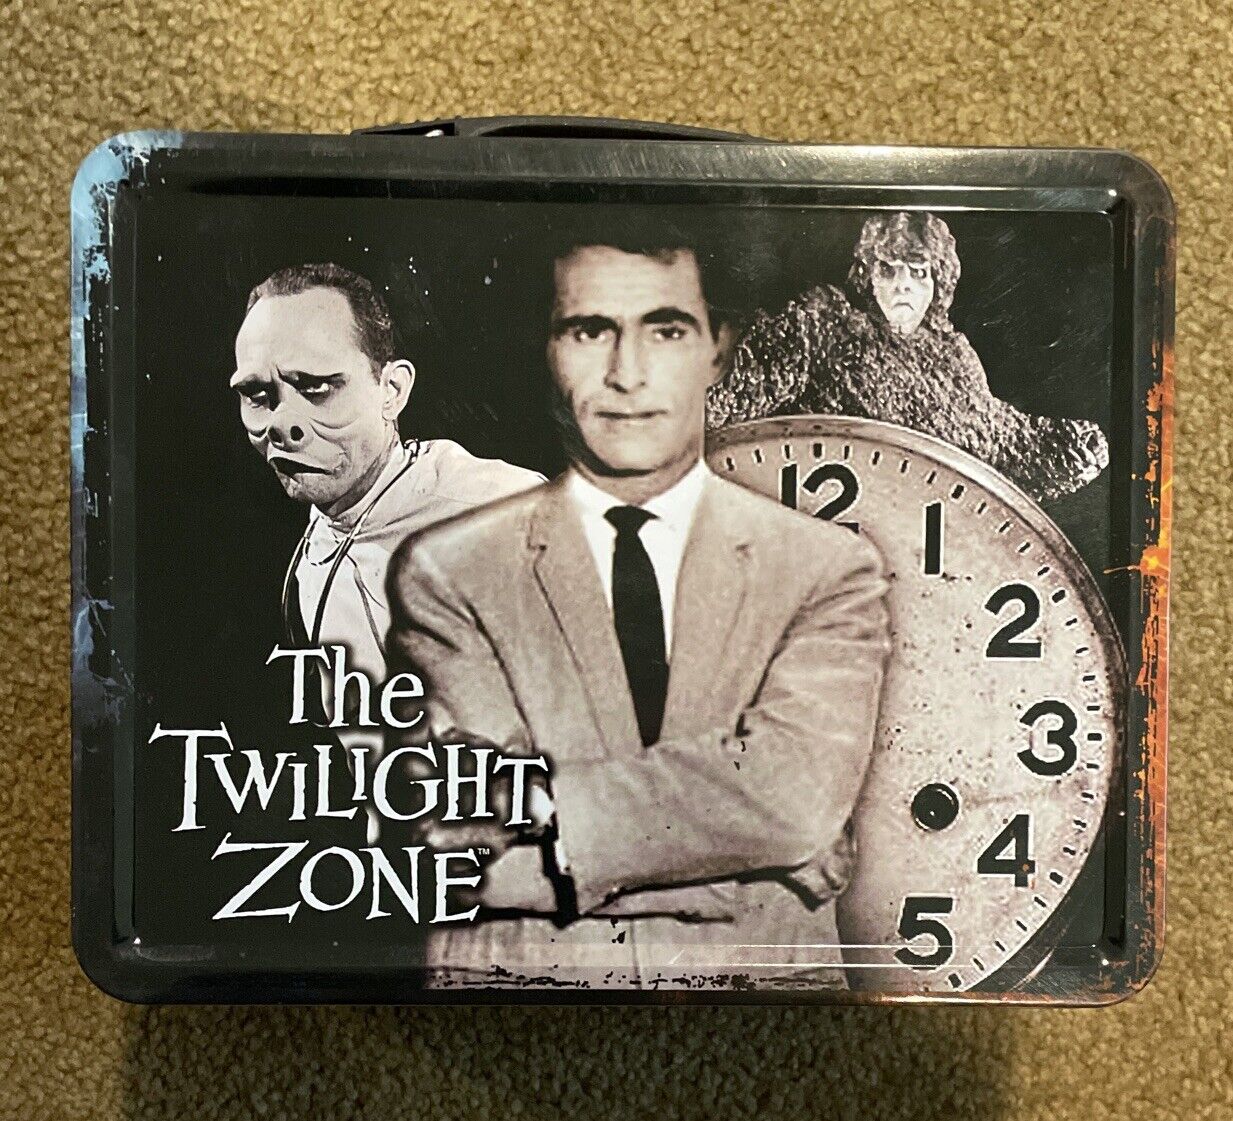 Twilight Zone Metal Lunch Box 2012 Bif Bang Pow